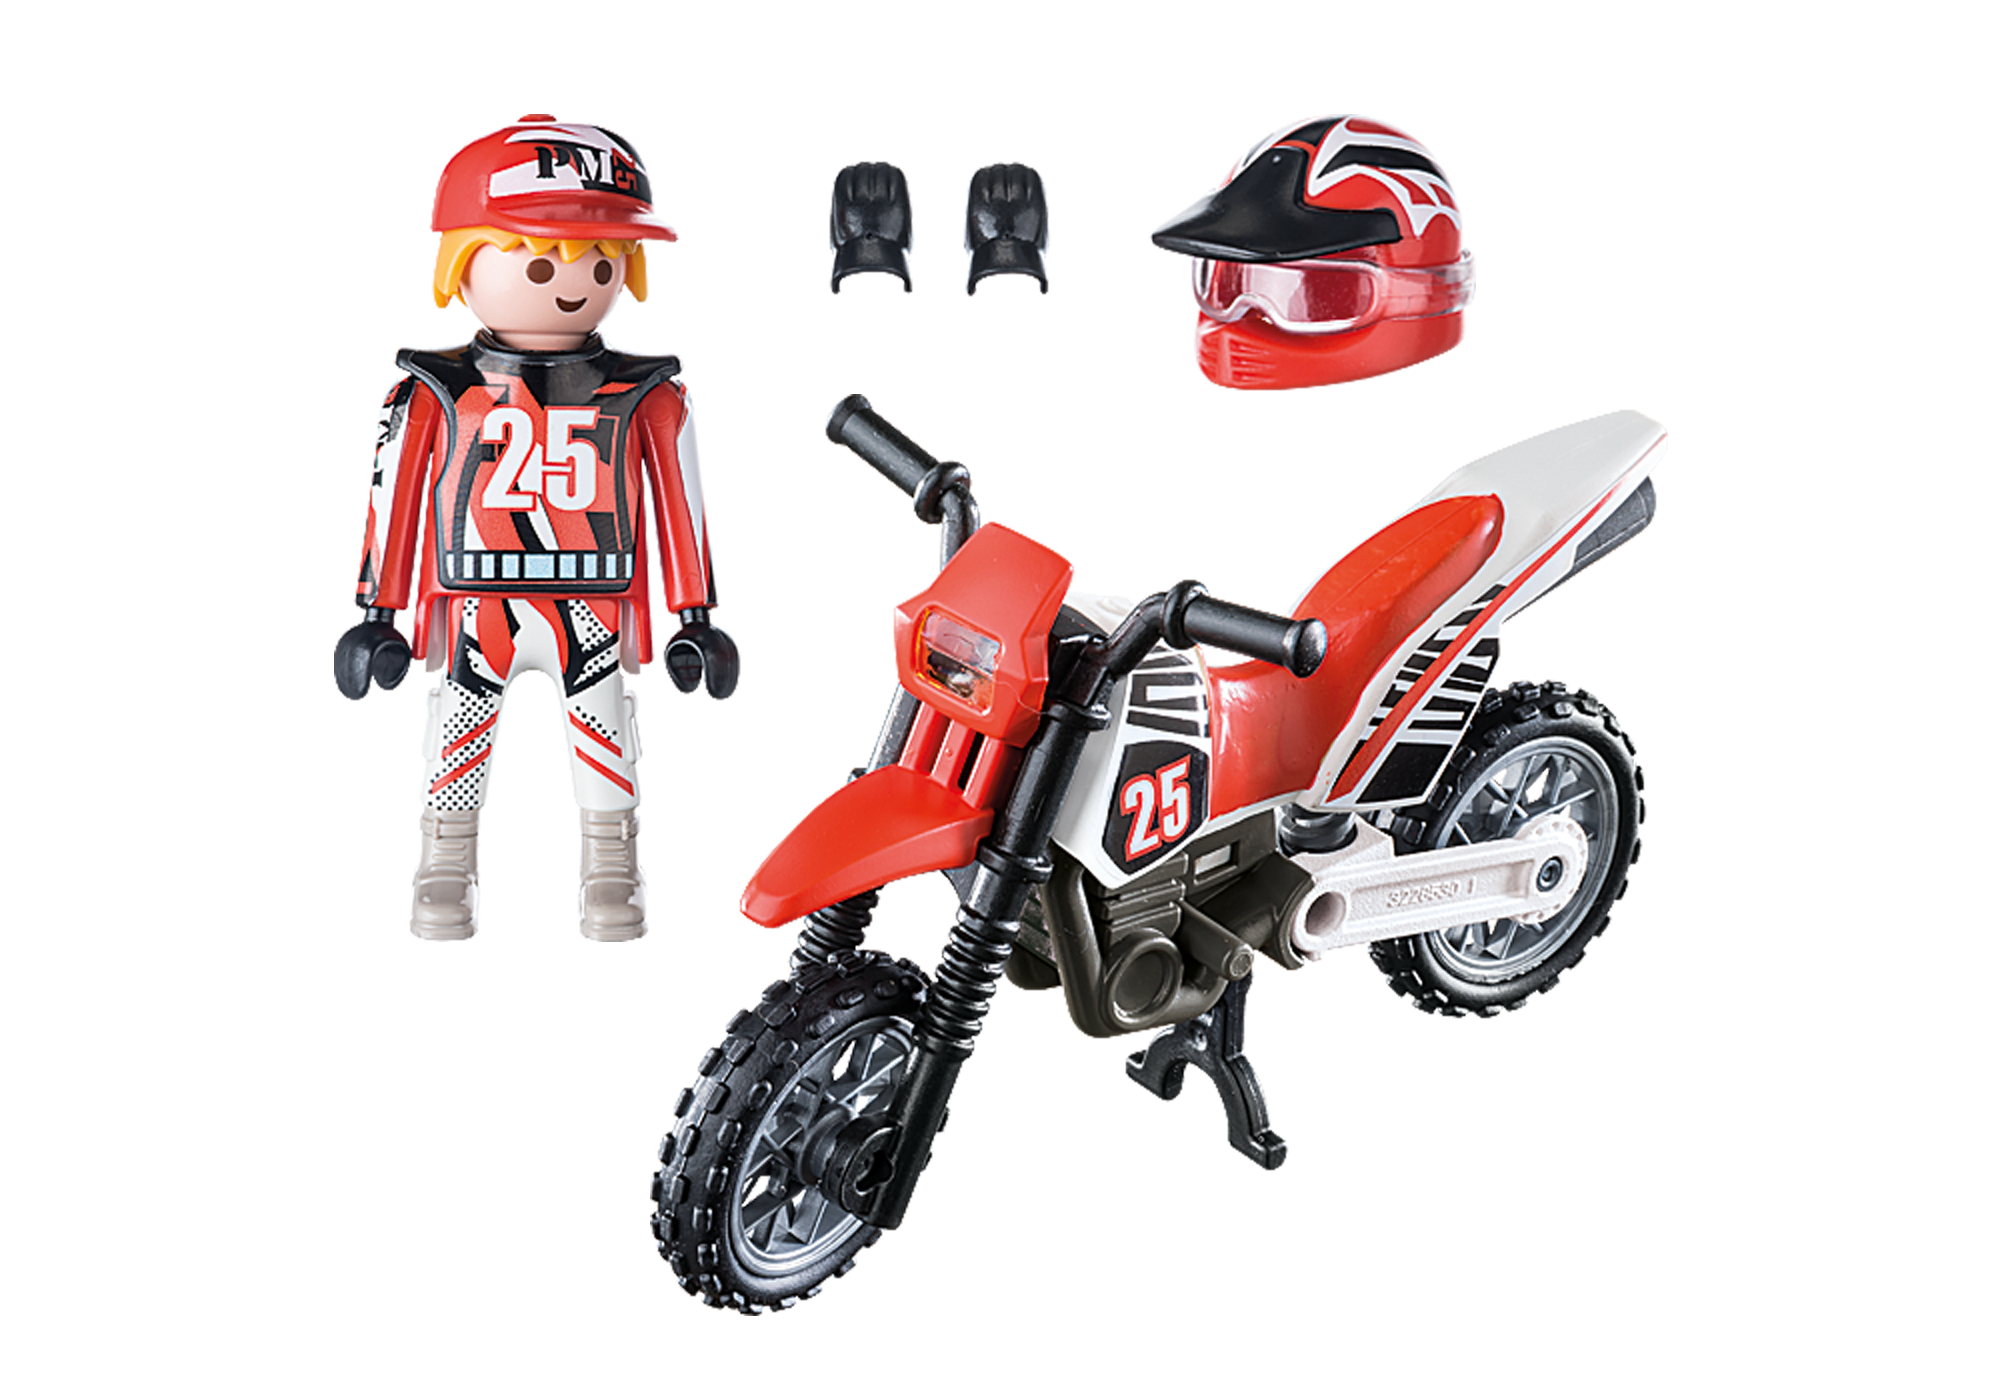 motocross playmobil